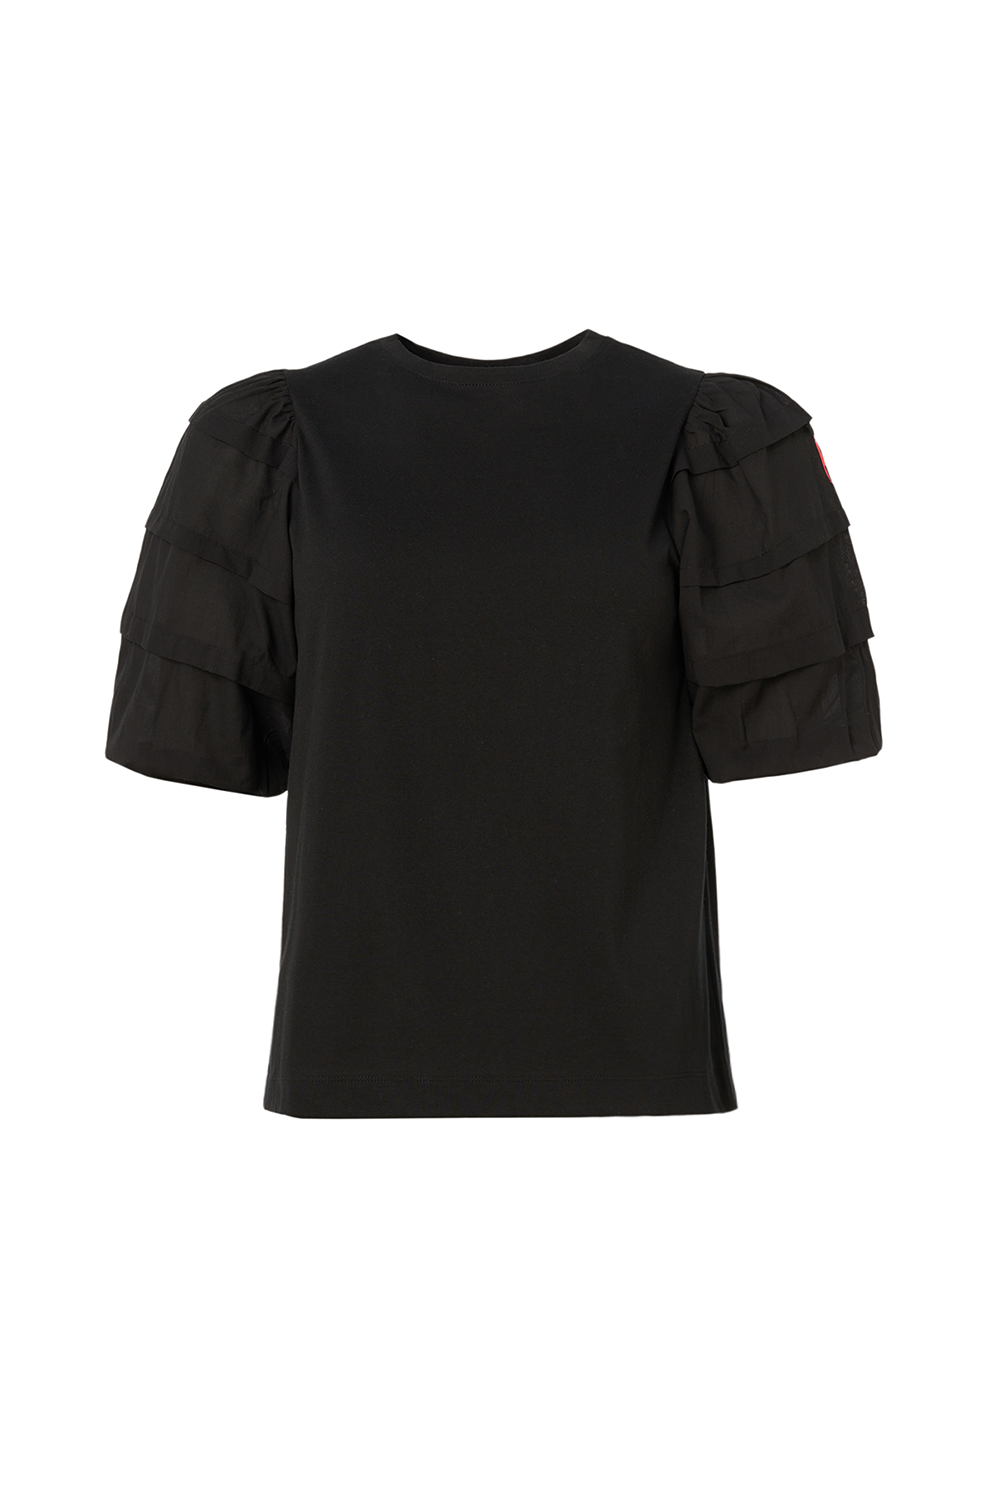 Black Pintuck Sleeve T-Shirt